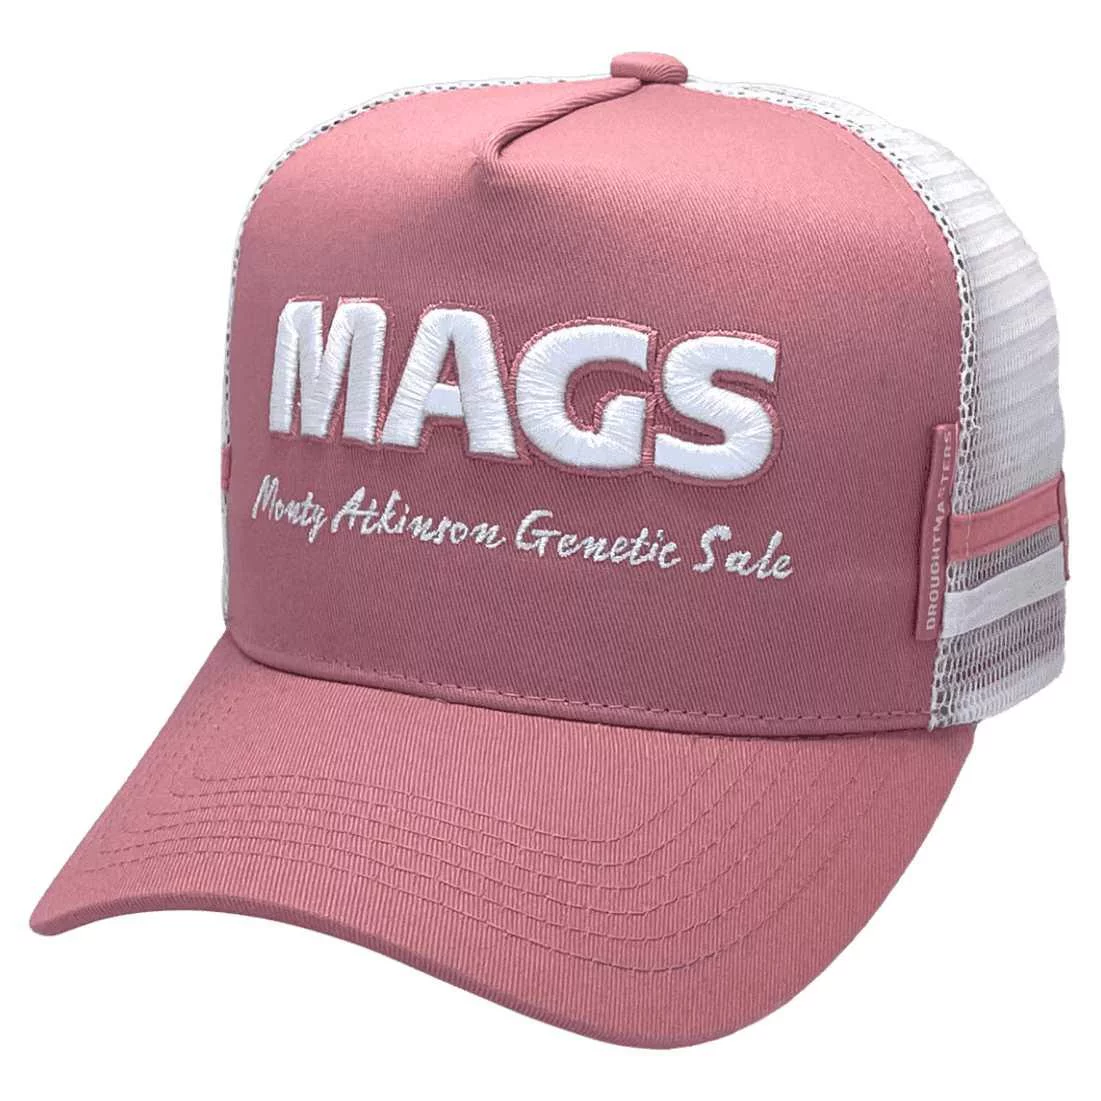 MAGS Monty Atkinson Genetic Sale Ipswich Qld HP Original Midrange Aussie Trucker Hat with Australian Head Fit Crown and 2 Sidebands Dusty Pink White